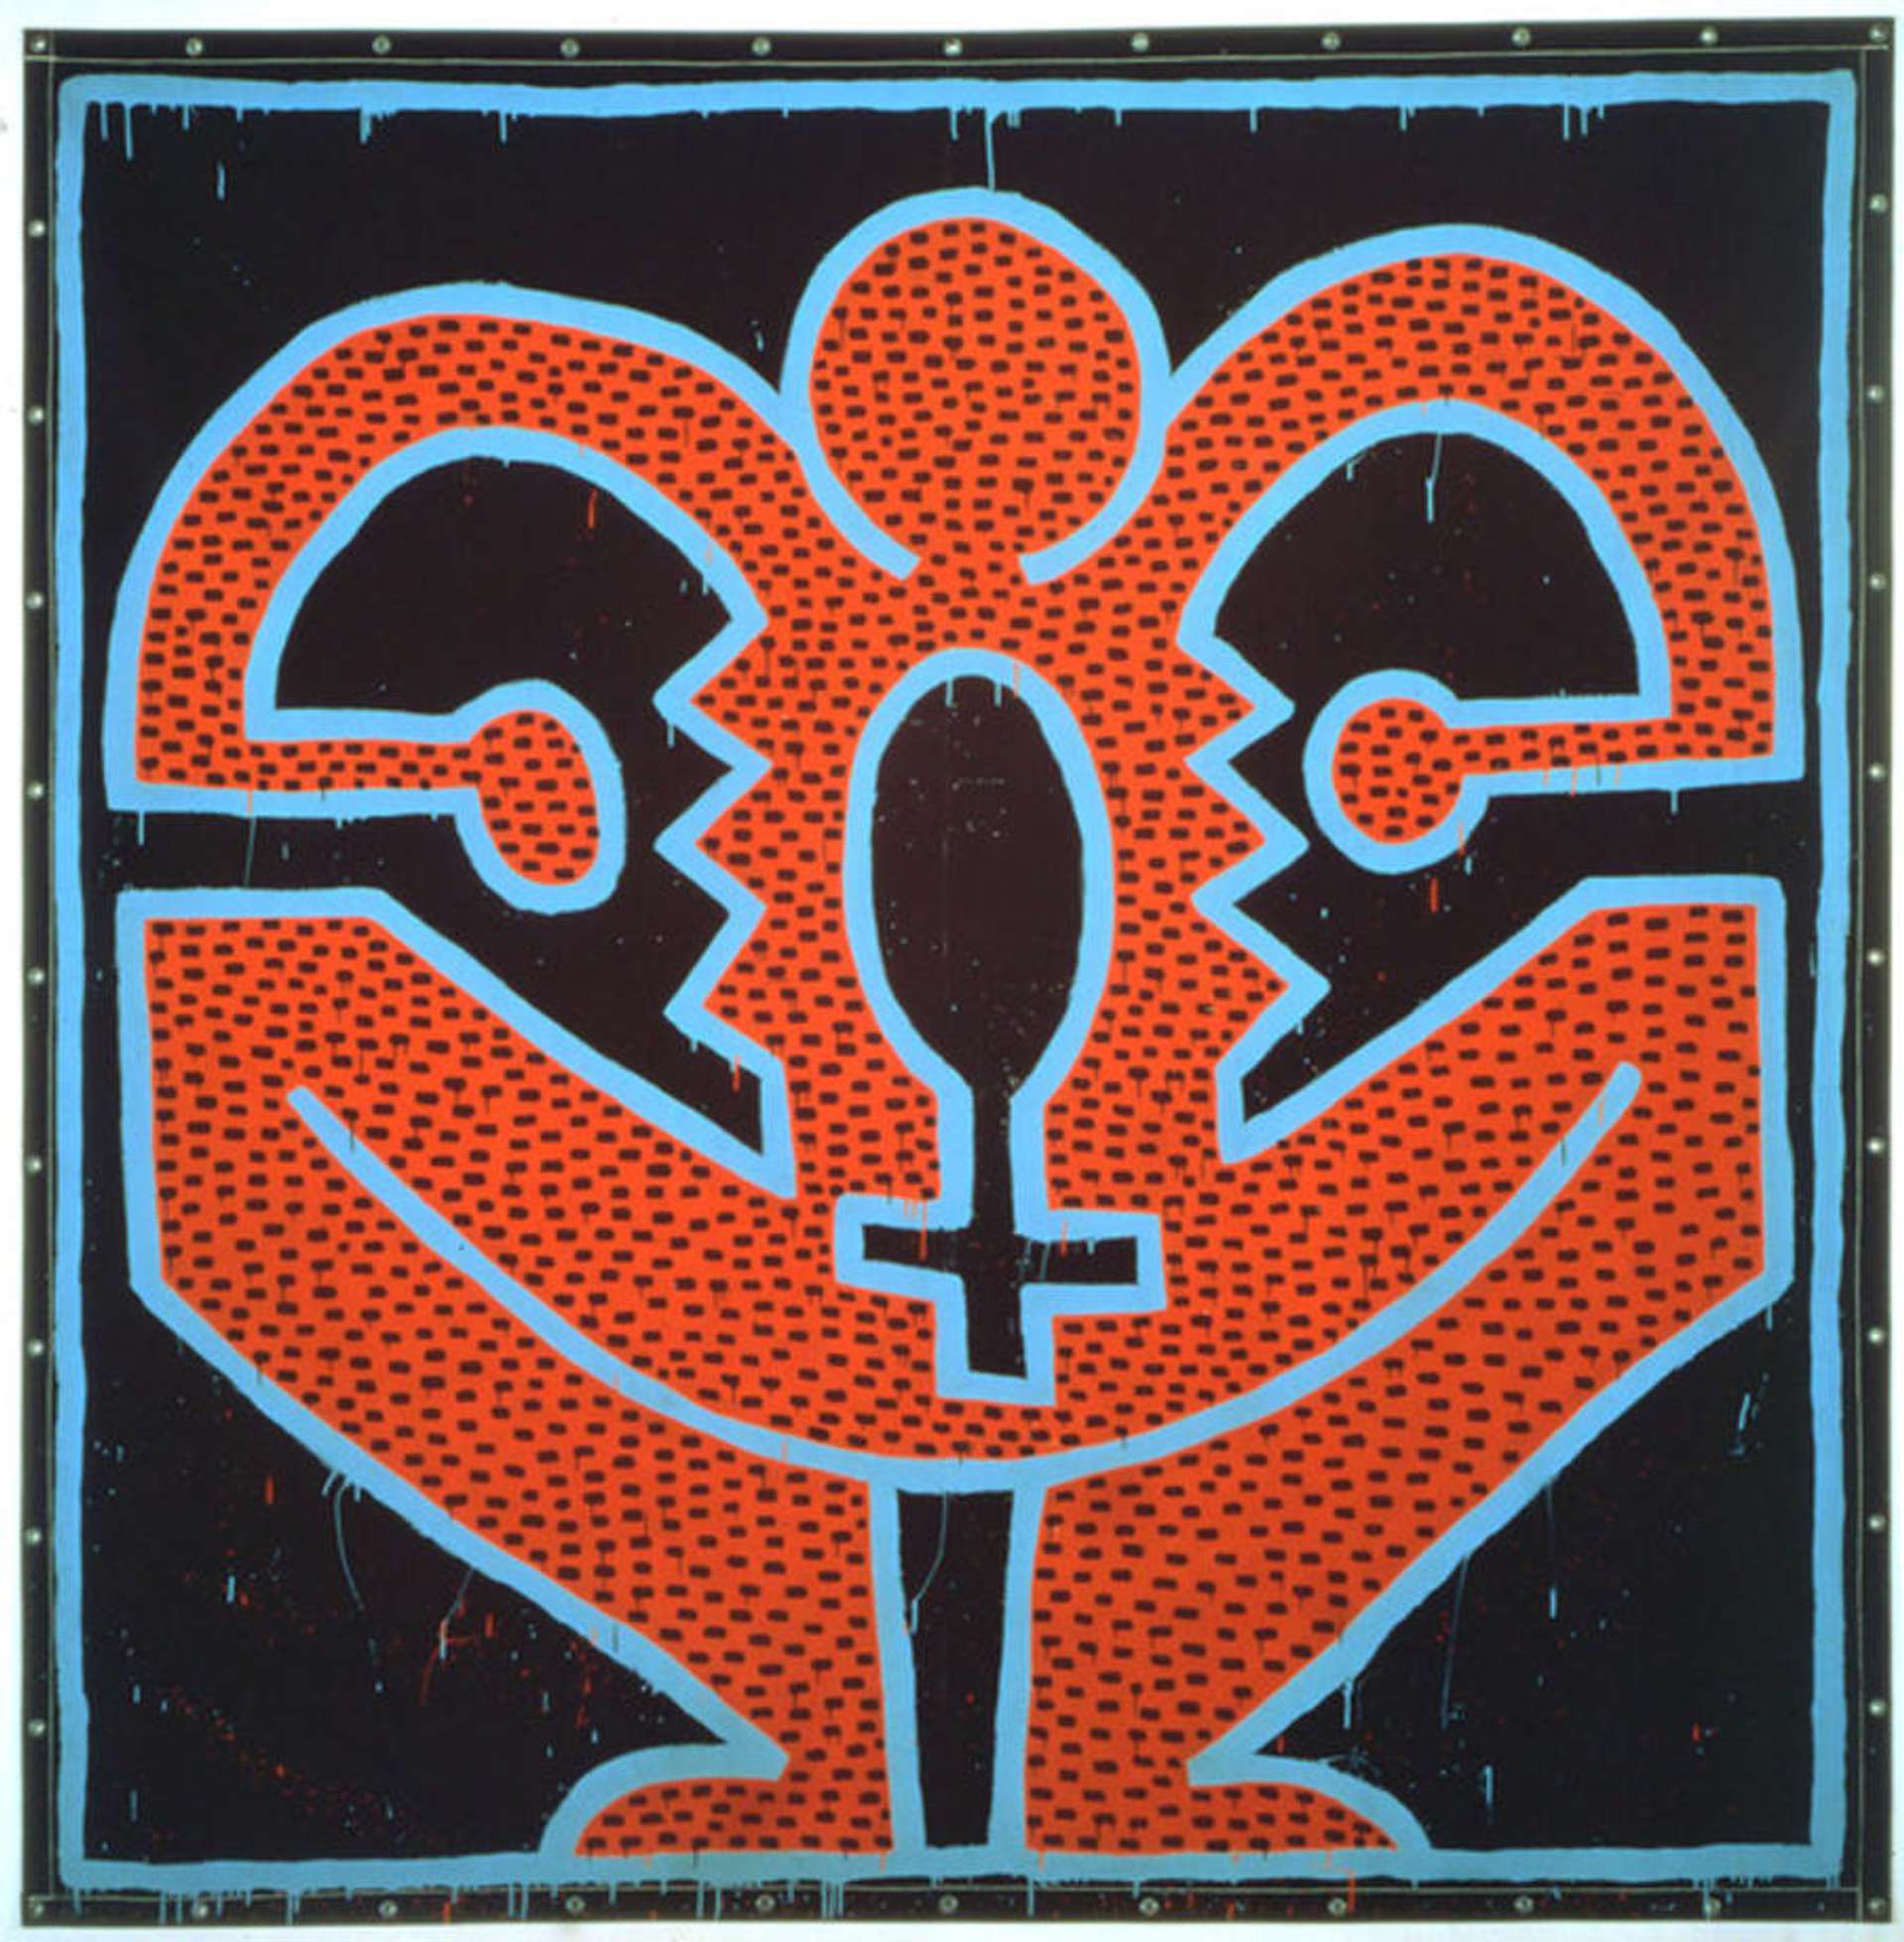 Untitled by Keith Haring 1983 - MyArtBroker